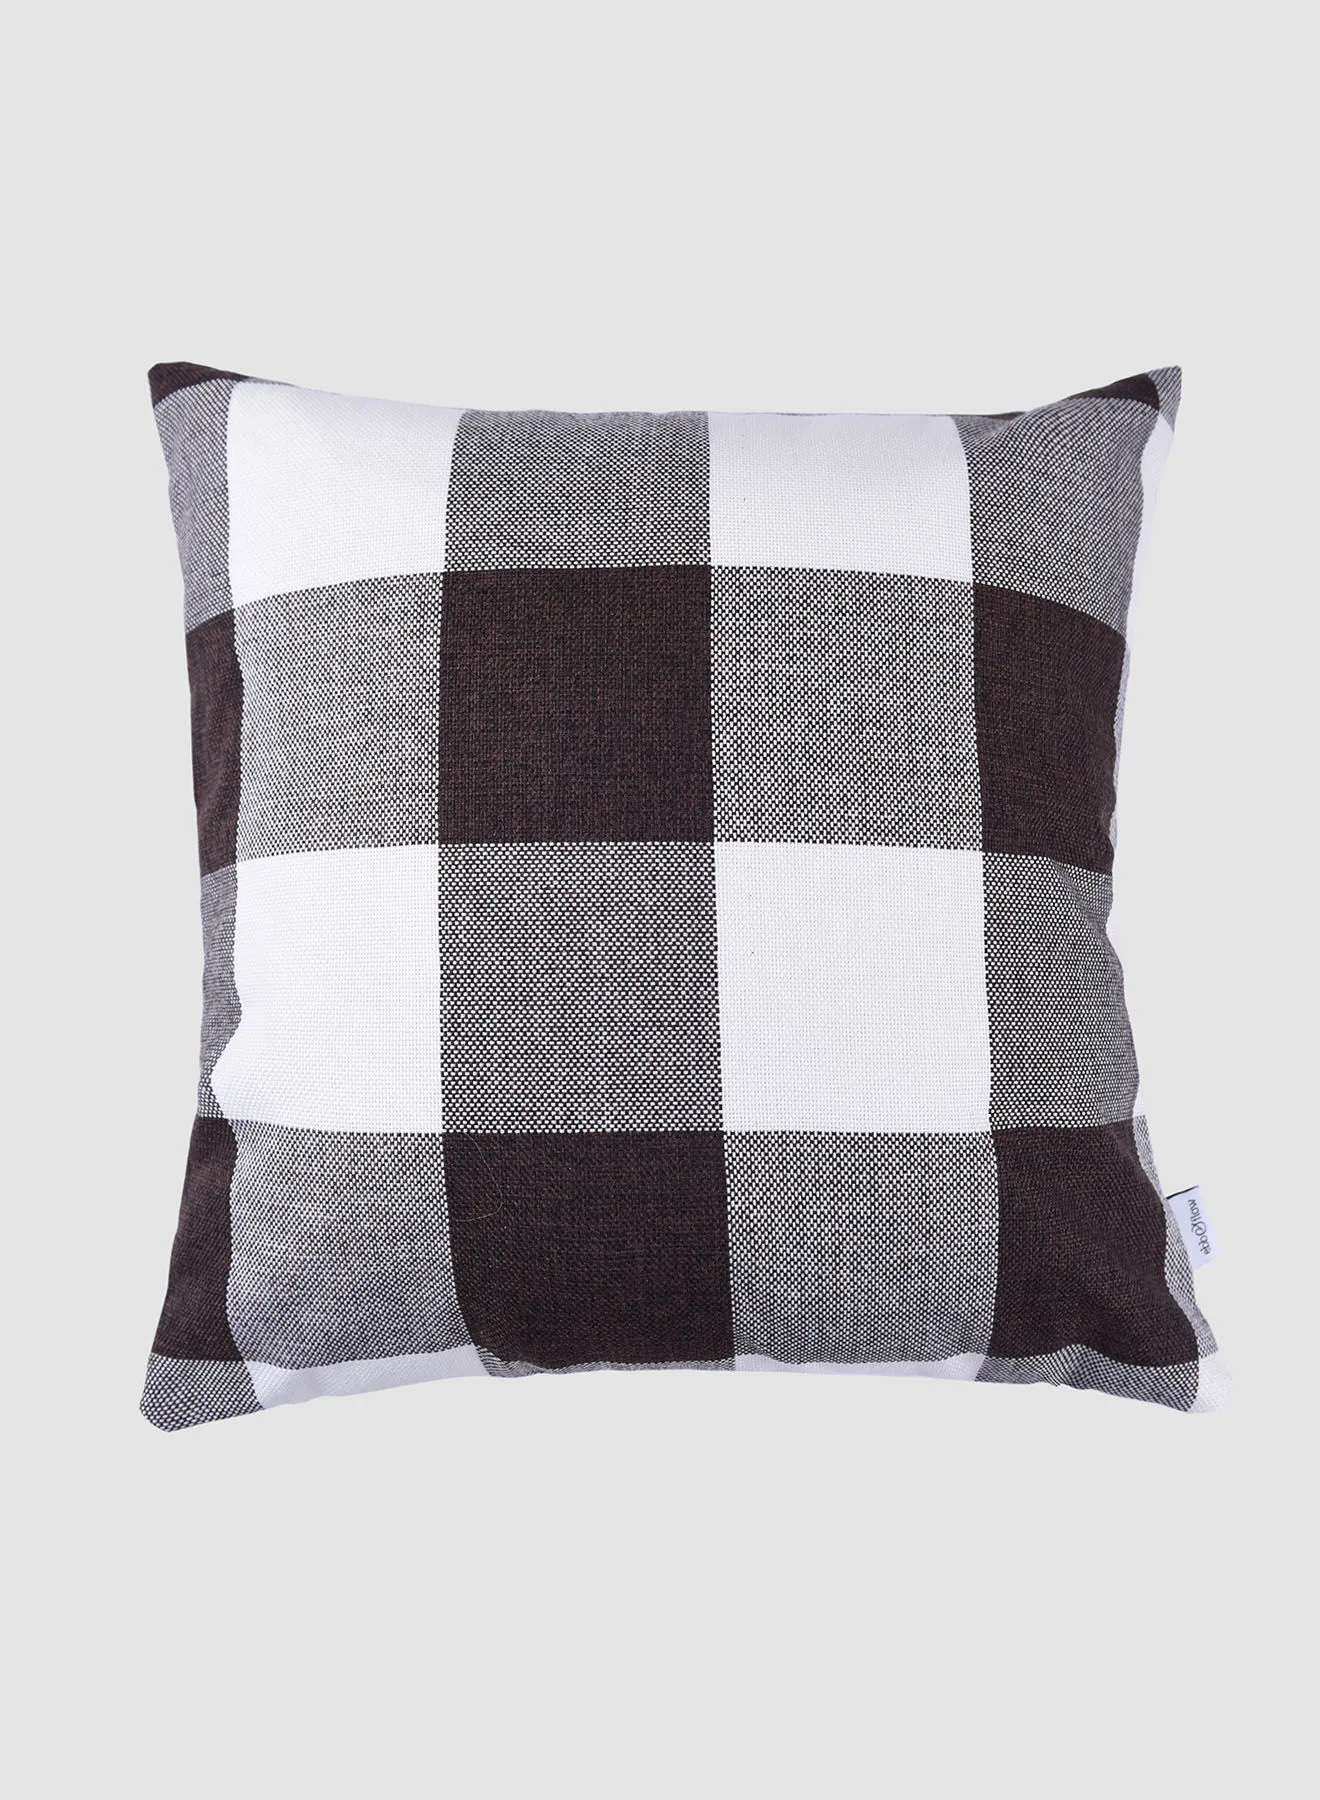 ebb & flow Stripes & Plaid Cushion, Unique Luxury Quality Decor Items for the Perfect Stylish Home Brown/Black/White 45 x 45cm